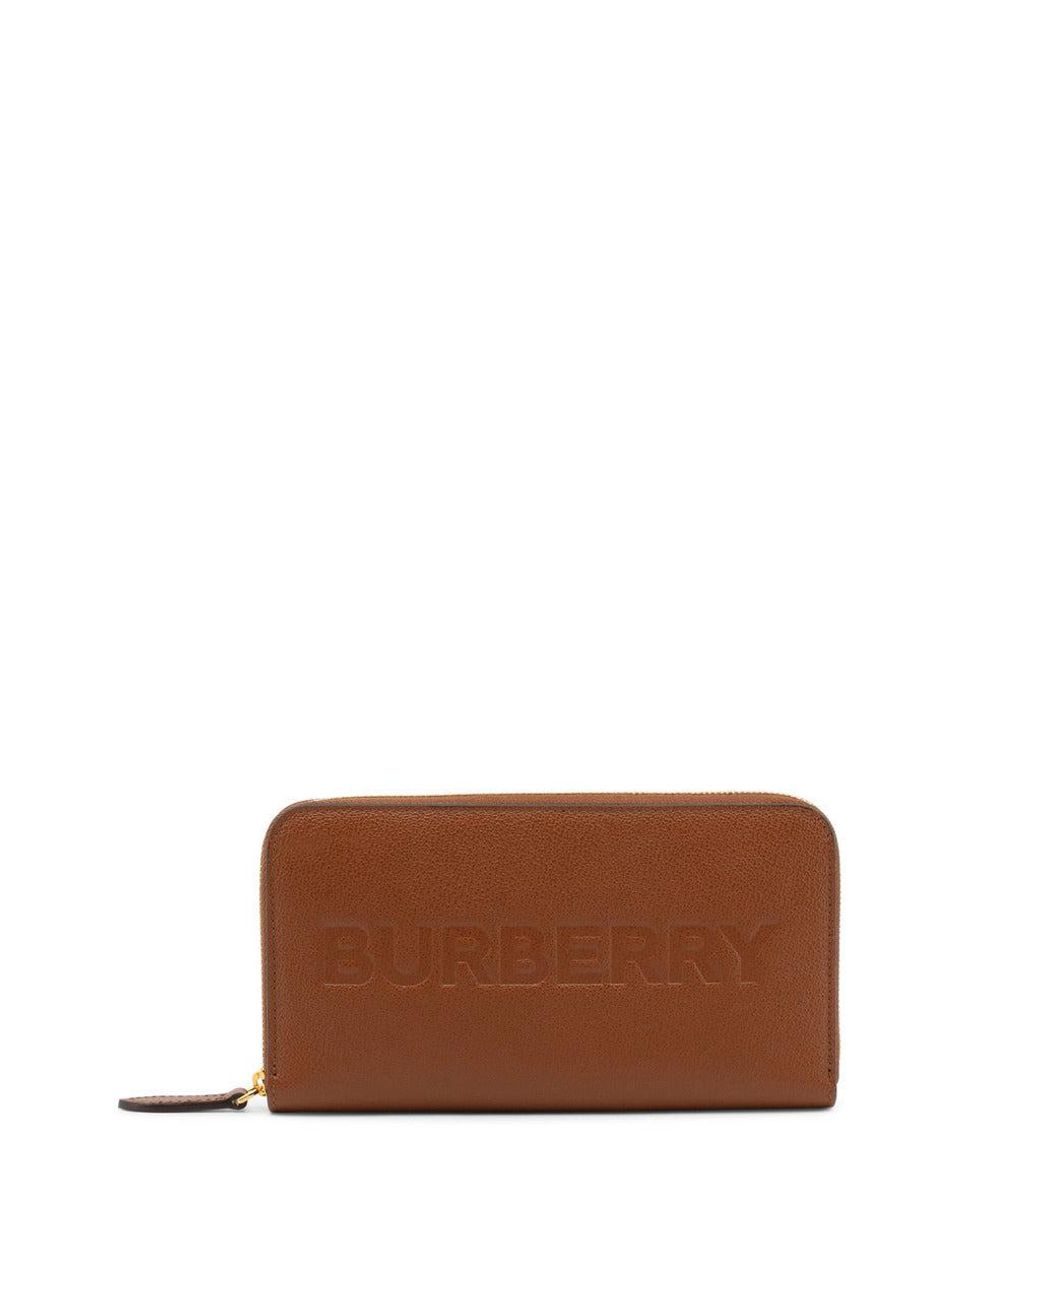 Burberry Wallet in Brown